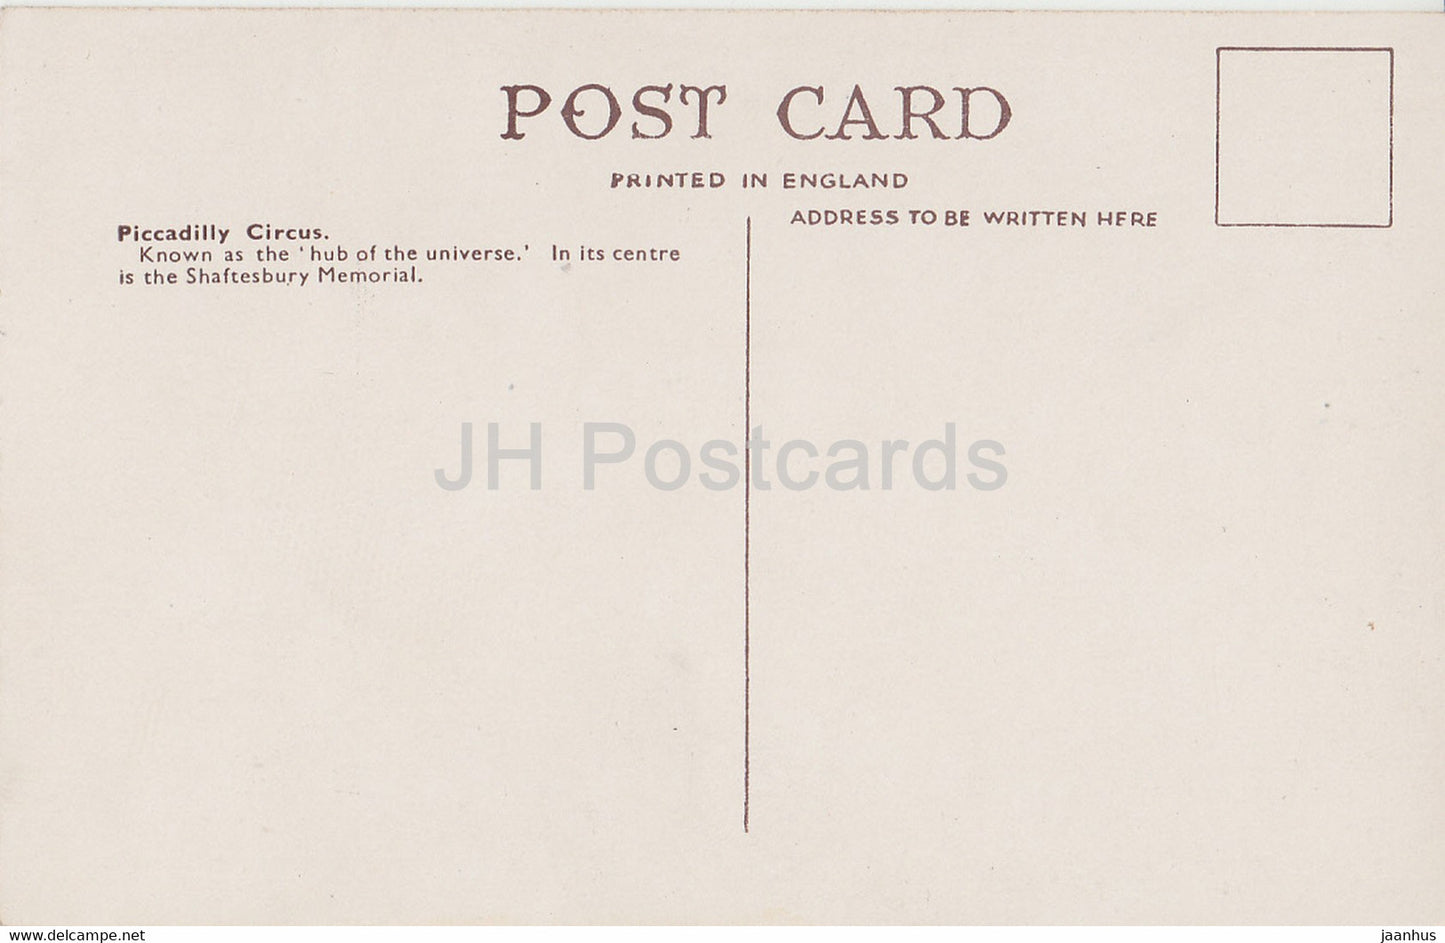 Londres - Piccadilly Circus - Montrant Regent St et Piccadilly - bus - carte postale ancienne - Royaume-Uni - Angleterre - inutilisé